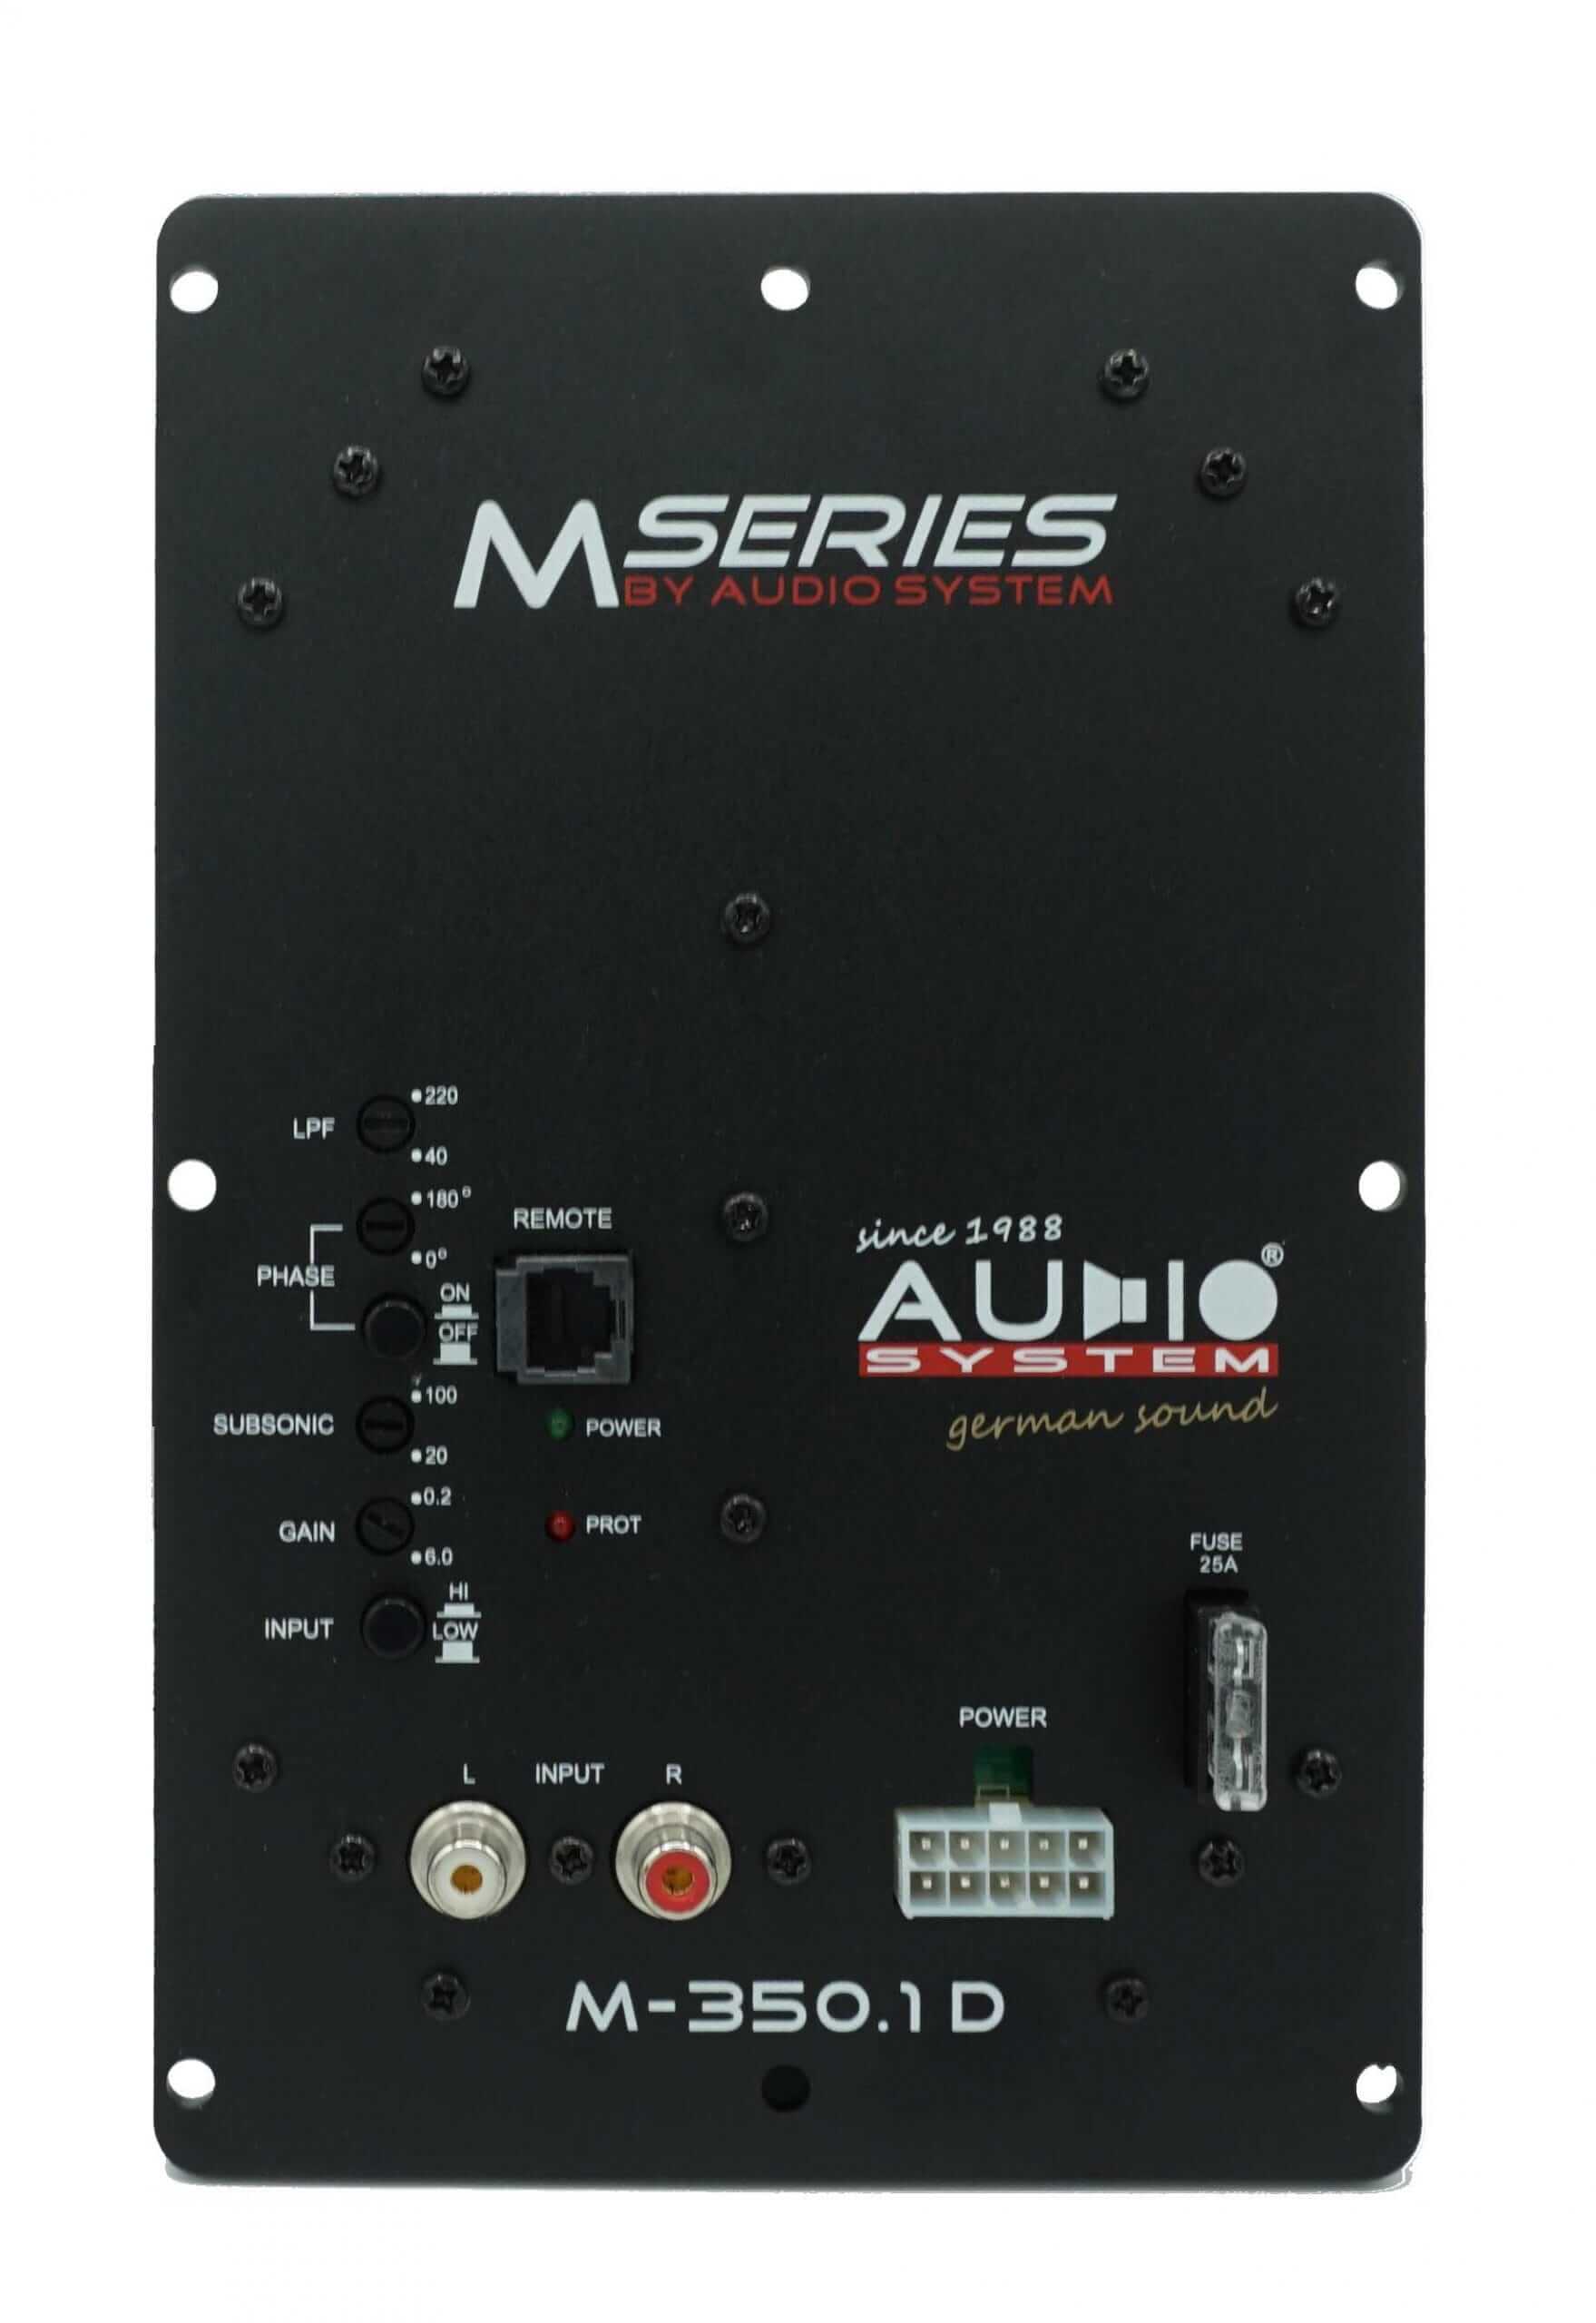 Audio System SUBFRAME R10 FLAT ACTIVE EVO